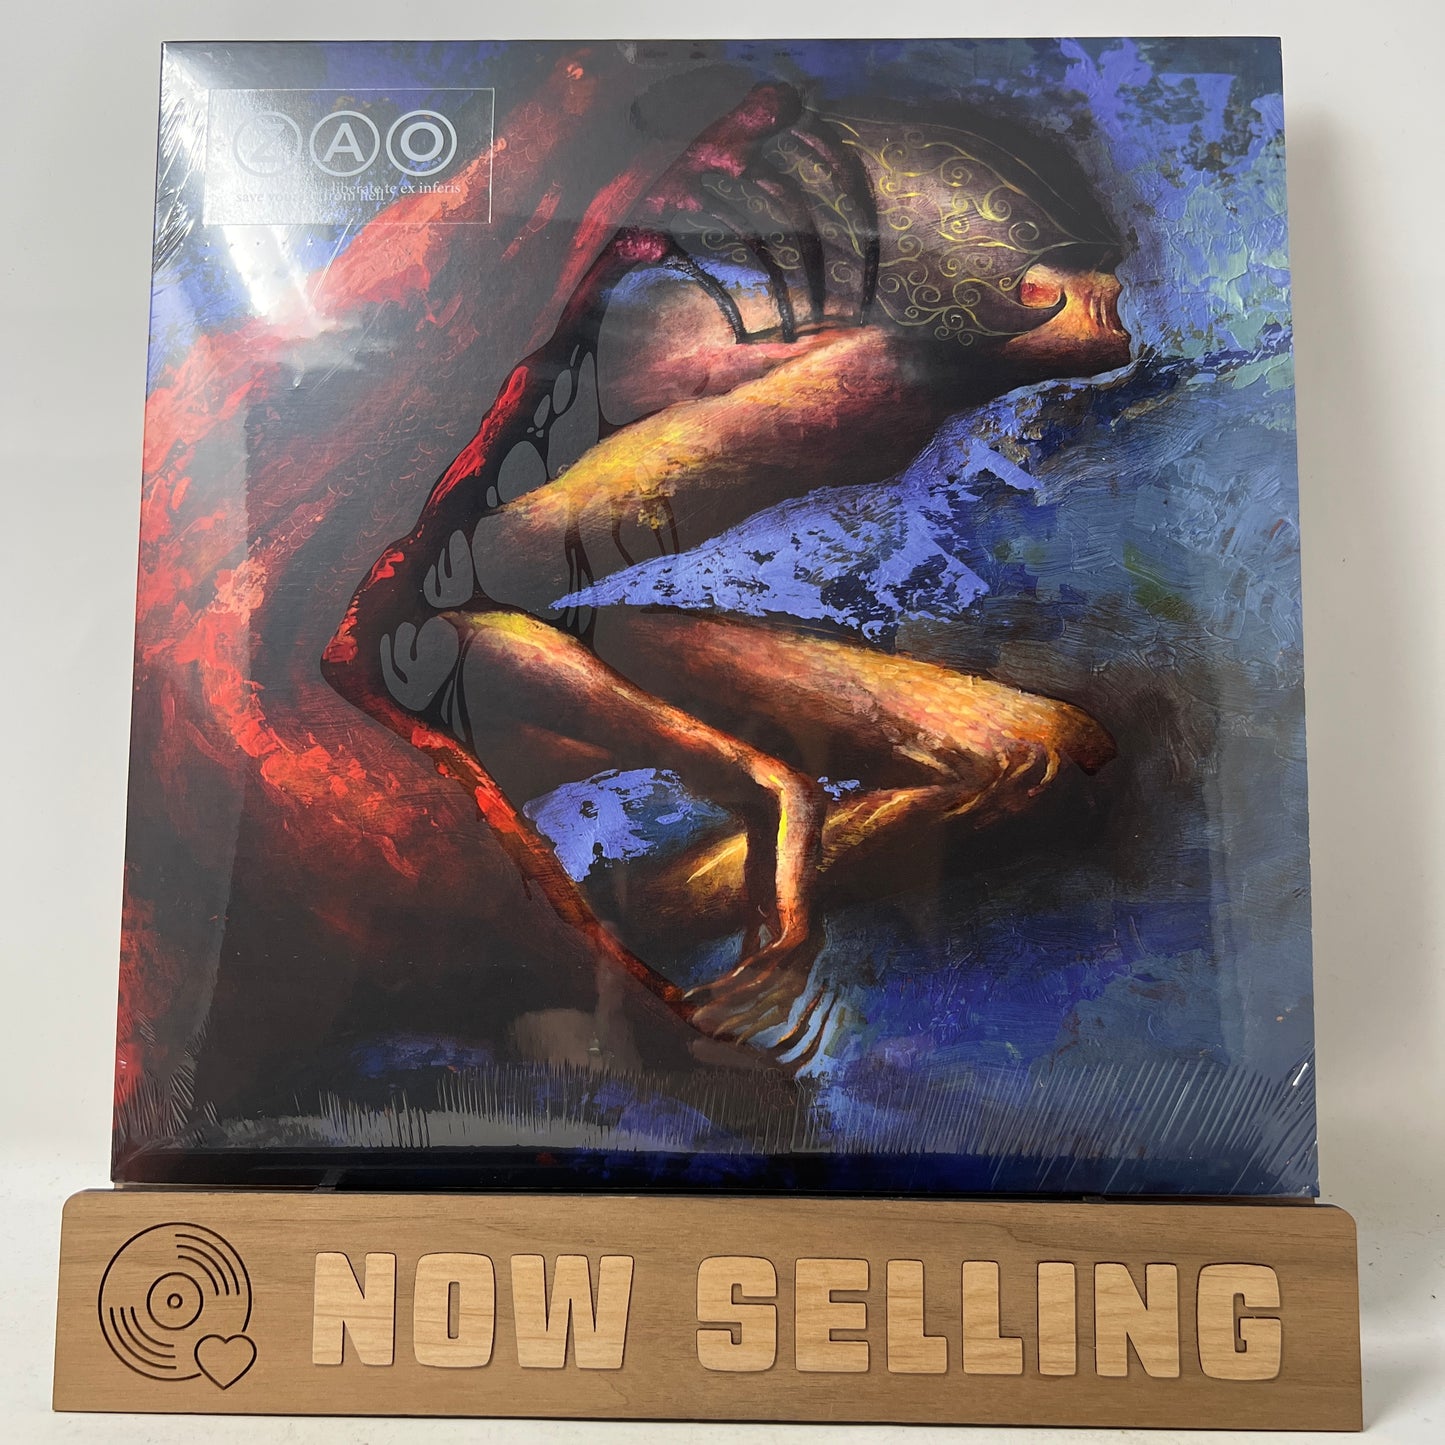 ZAO - Liberate Te Ex Inferis Vinyl LP Reissue Blue SEALED